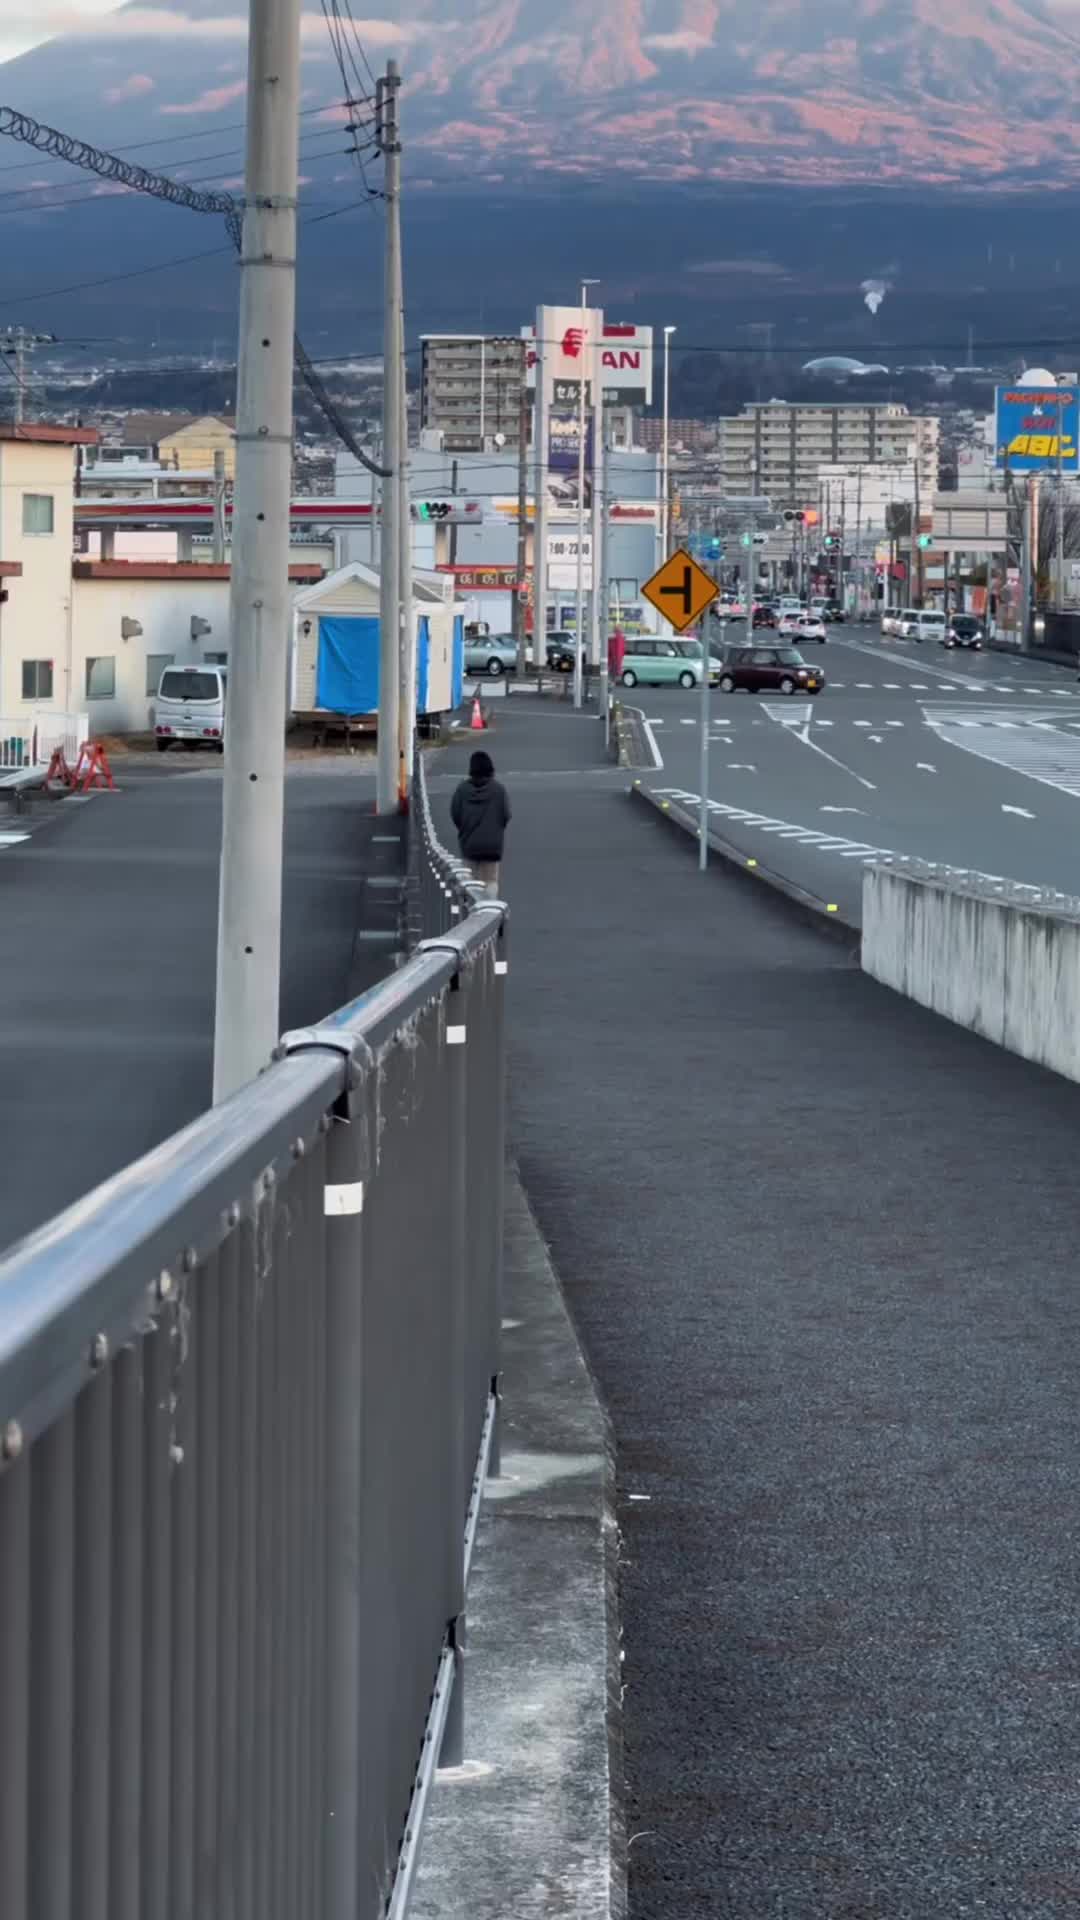 Cinematic Winter Scenes at Mt. Fuji's Dream Bridge